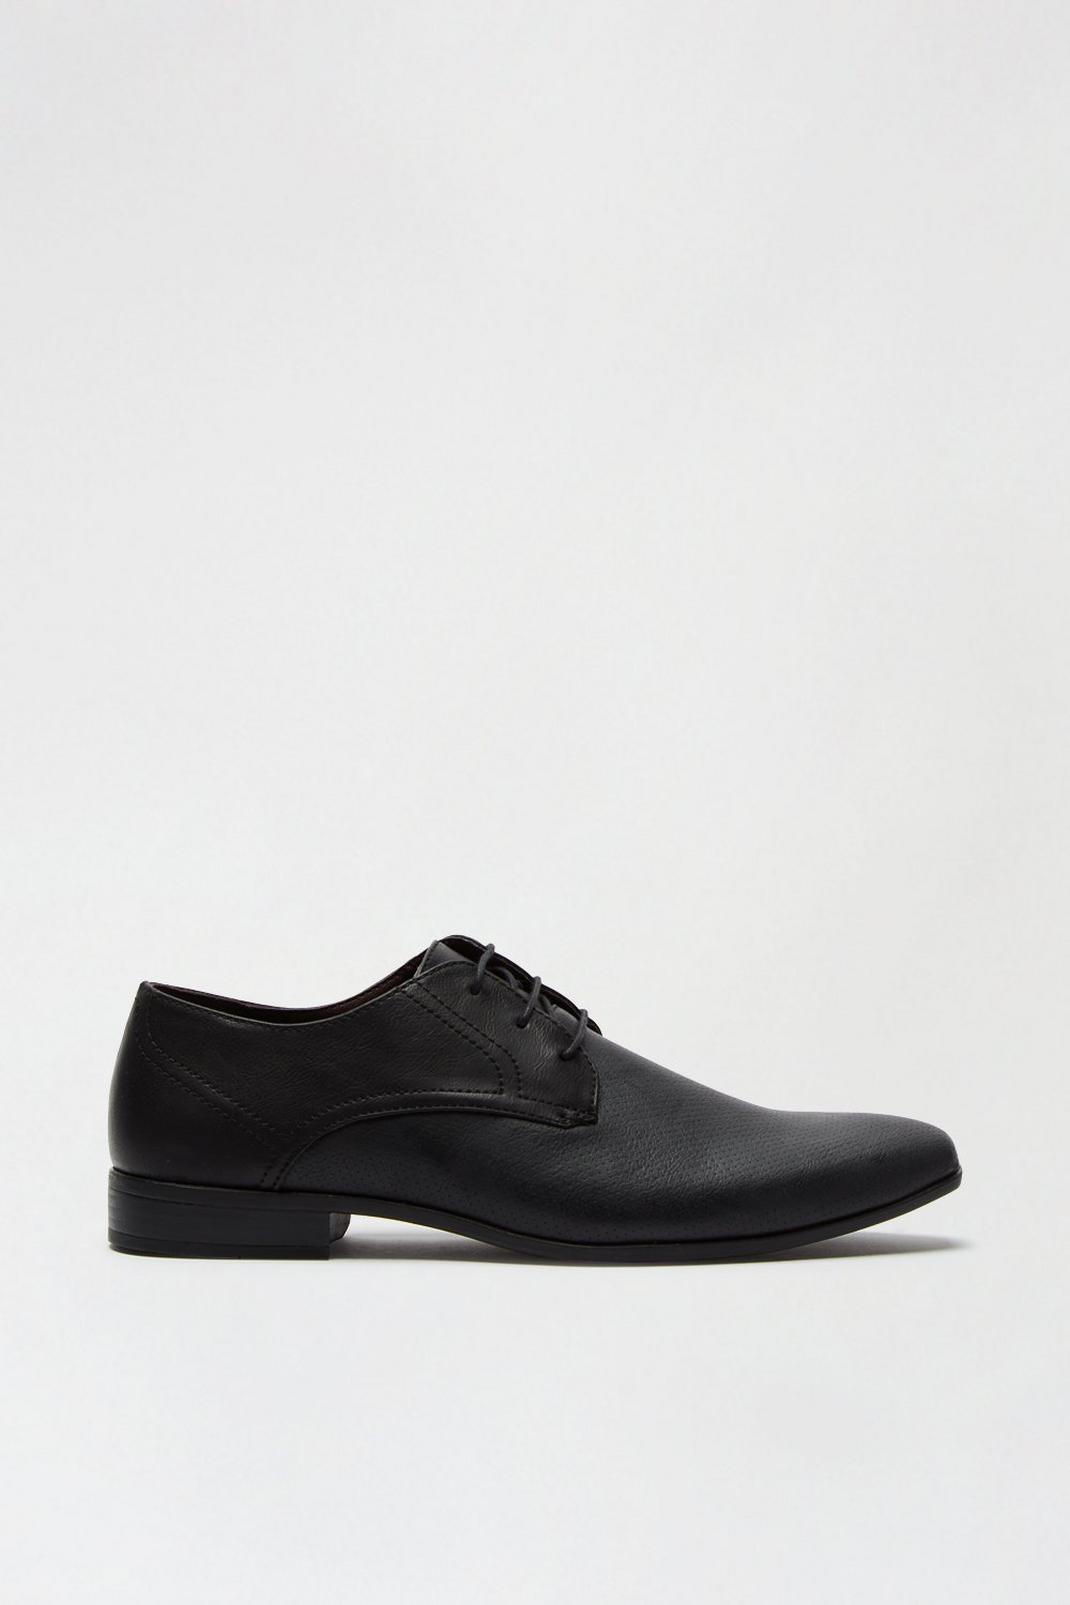 105 Black Leather Look Formal Derby Shoes image number 1